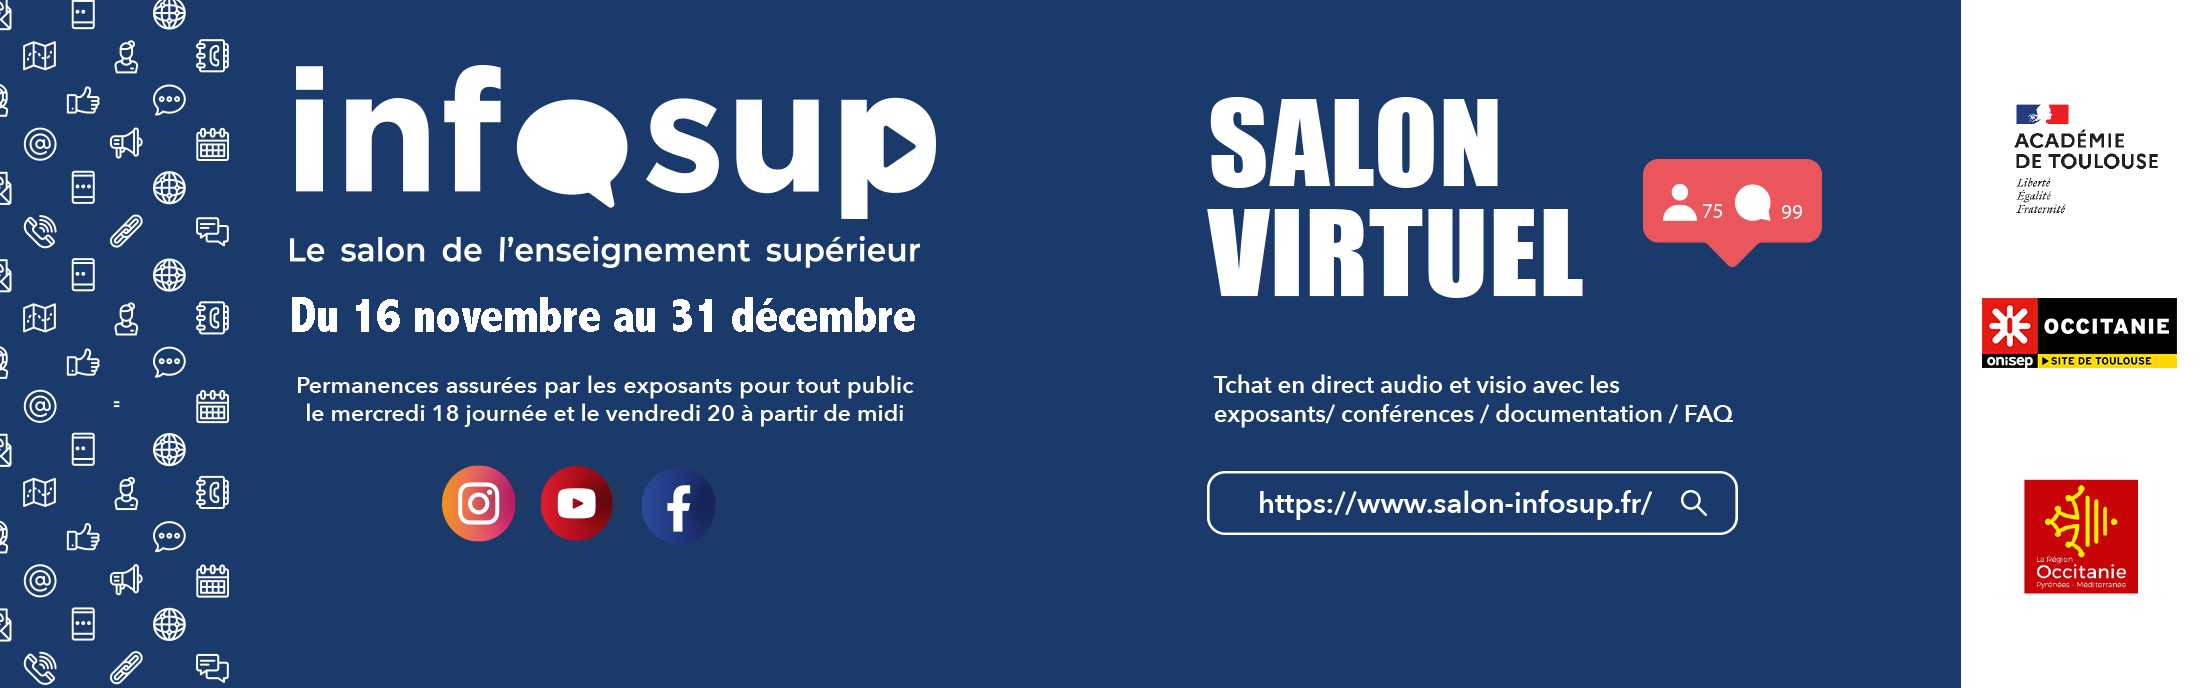 Salon Infosup virtuel.png